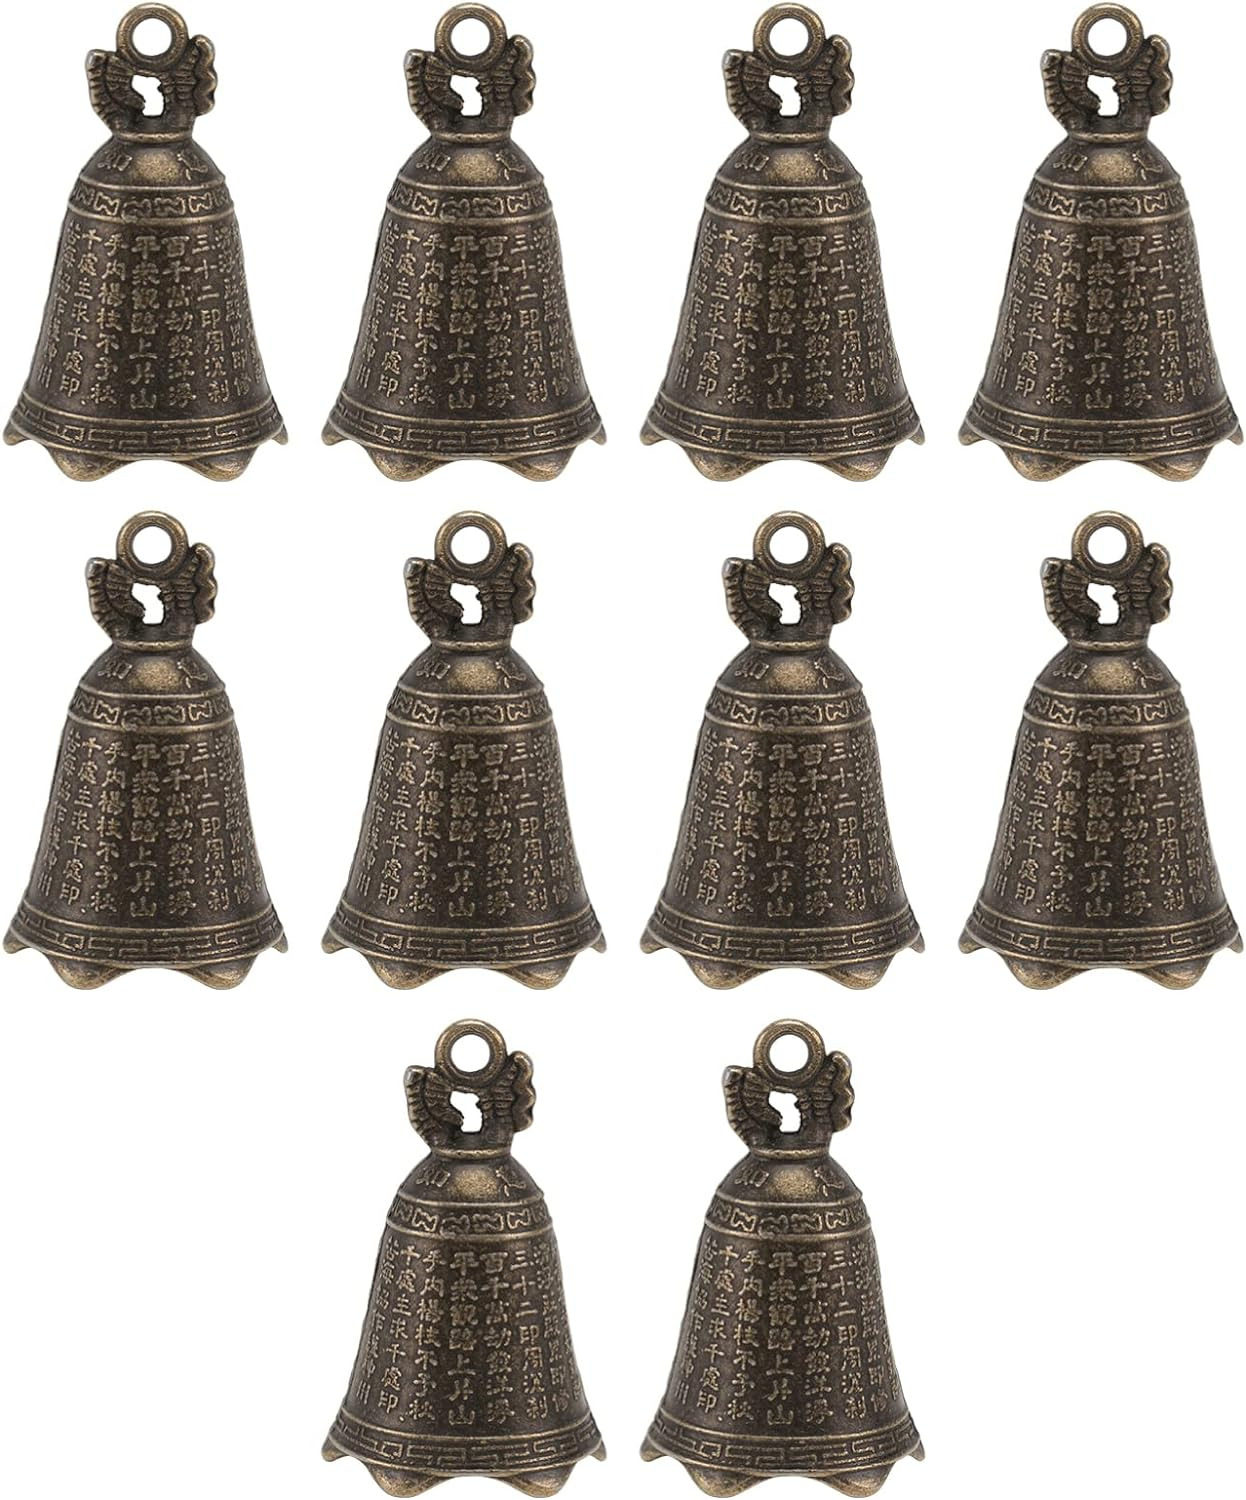 DOITOOL 10Pcs Vintage Bell Iron Bell Charm Craft Retro Bell Figurine Mini Jingle